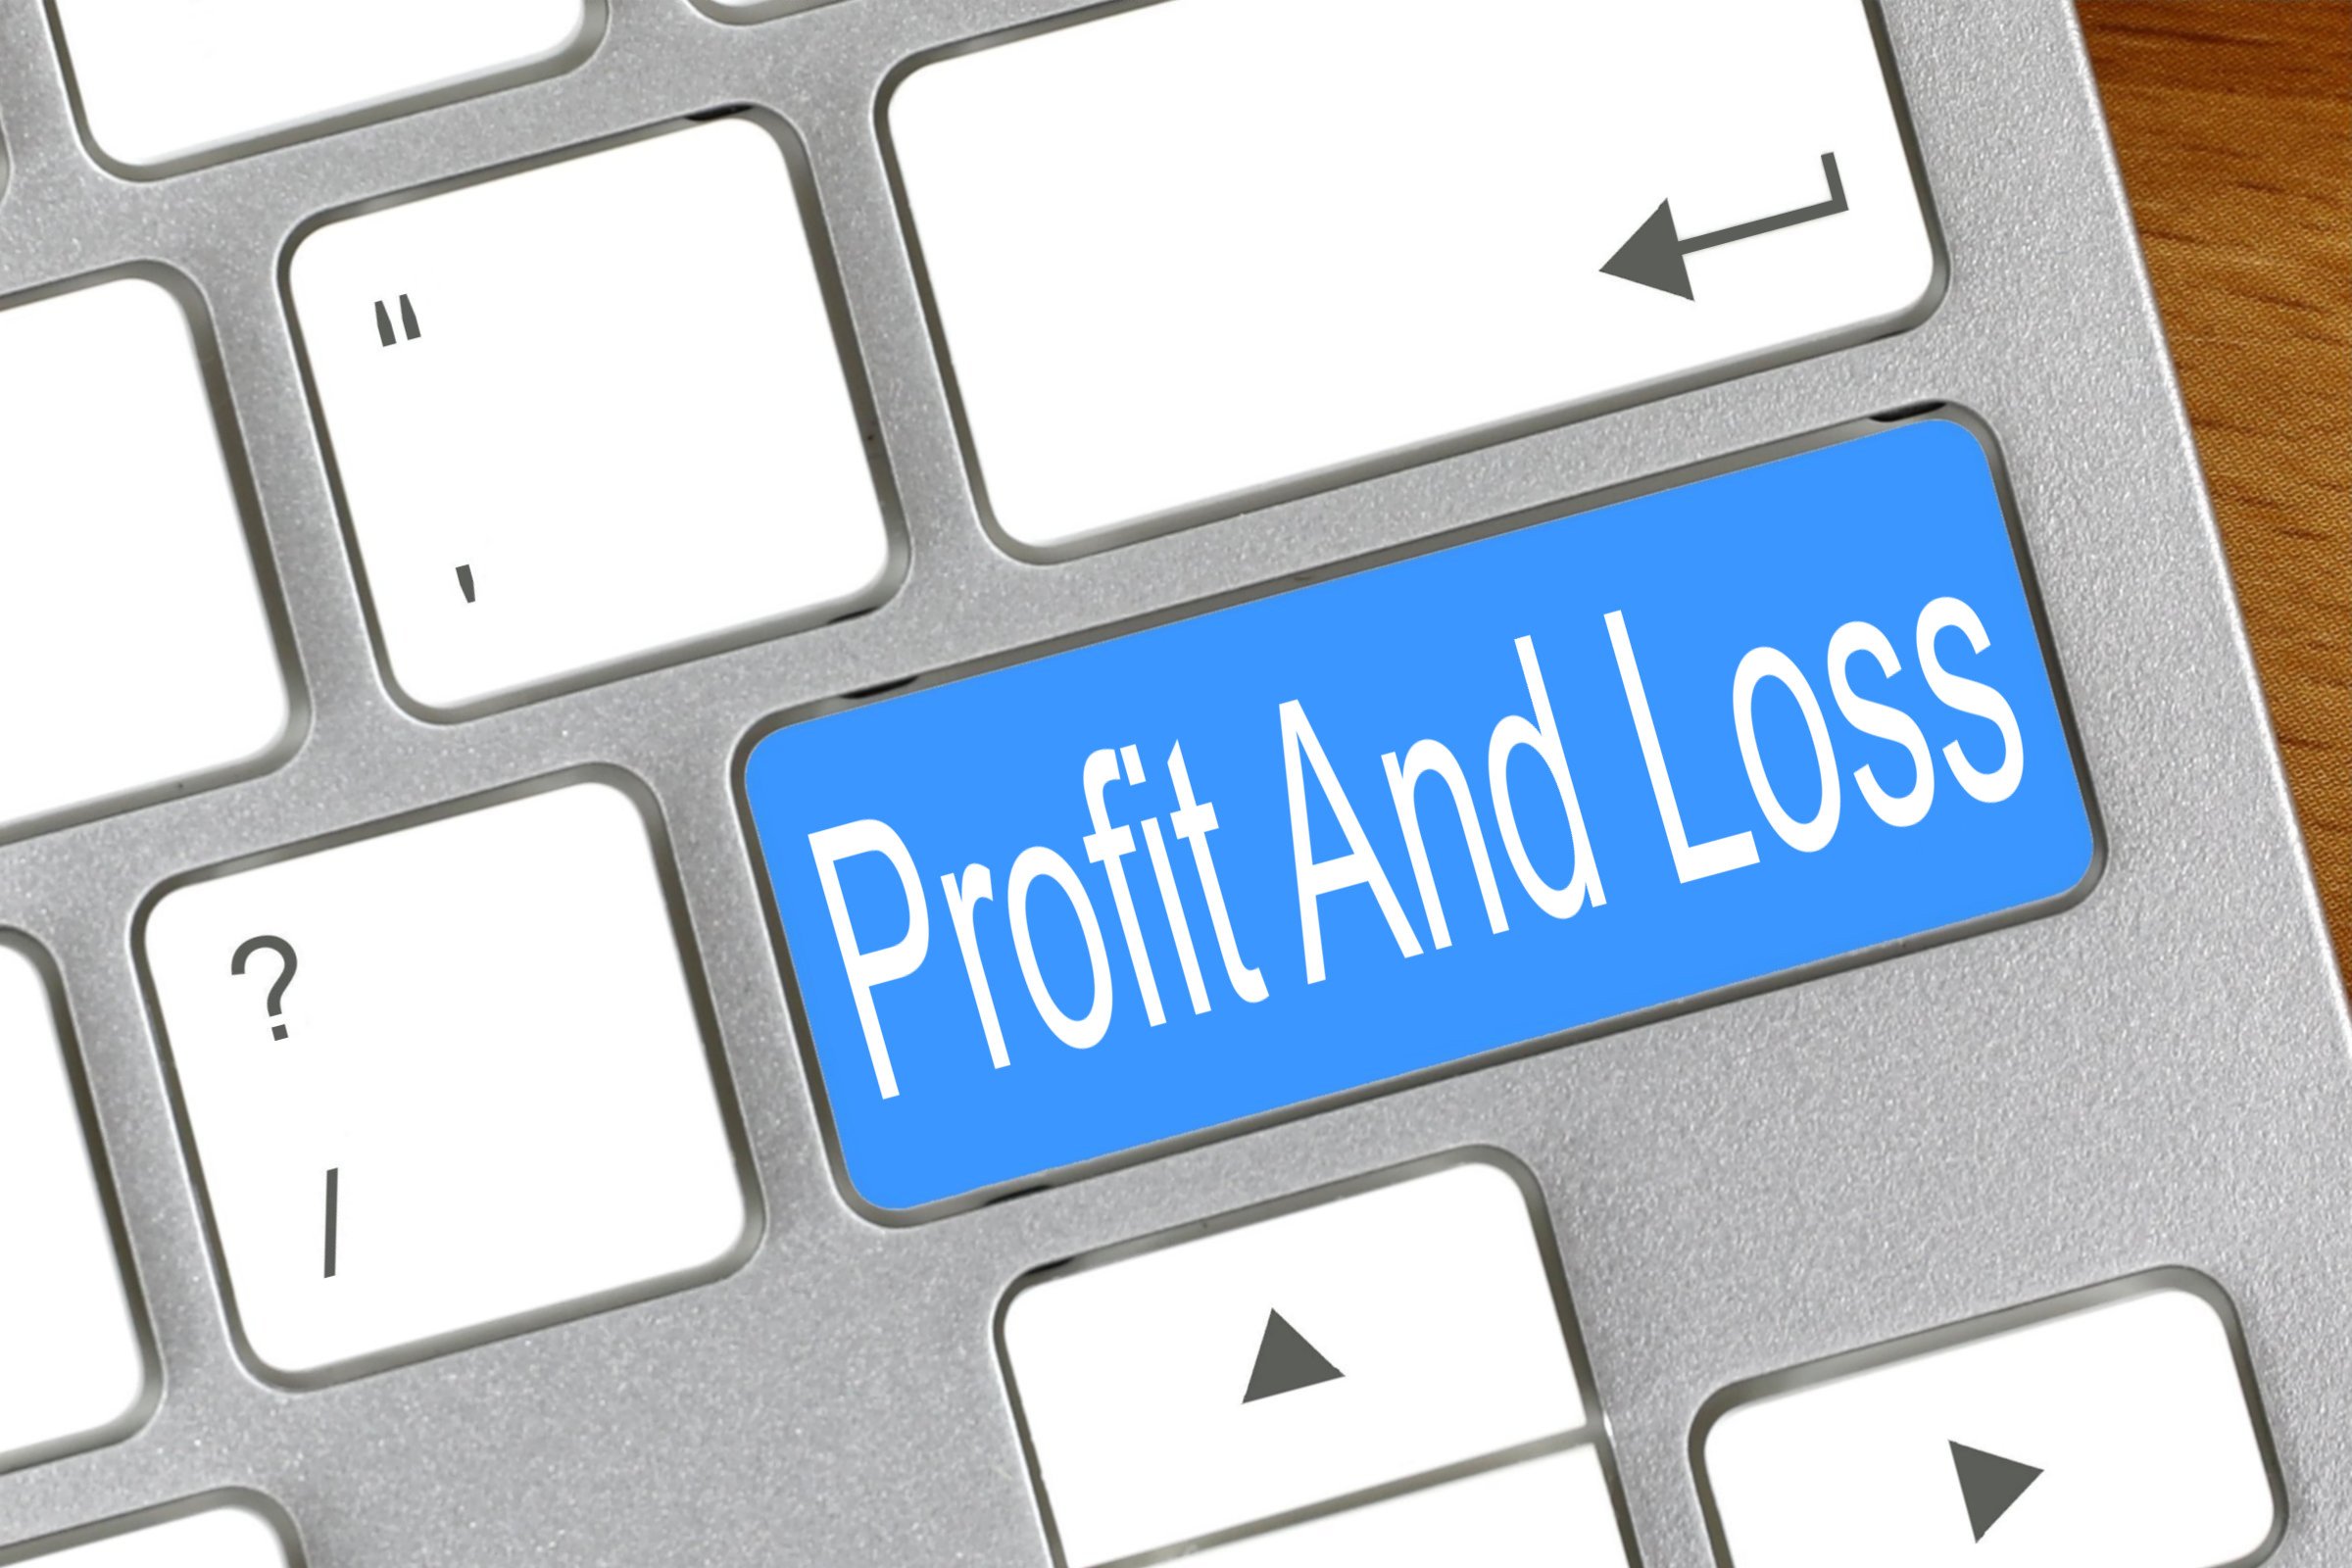 profit and loss